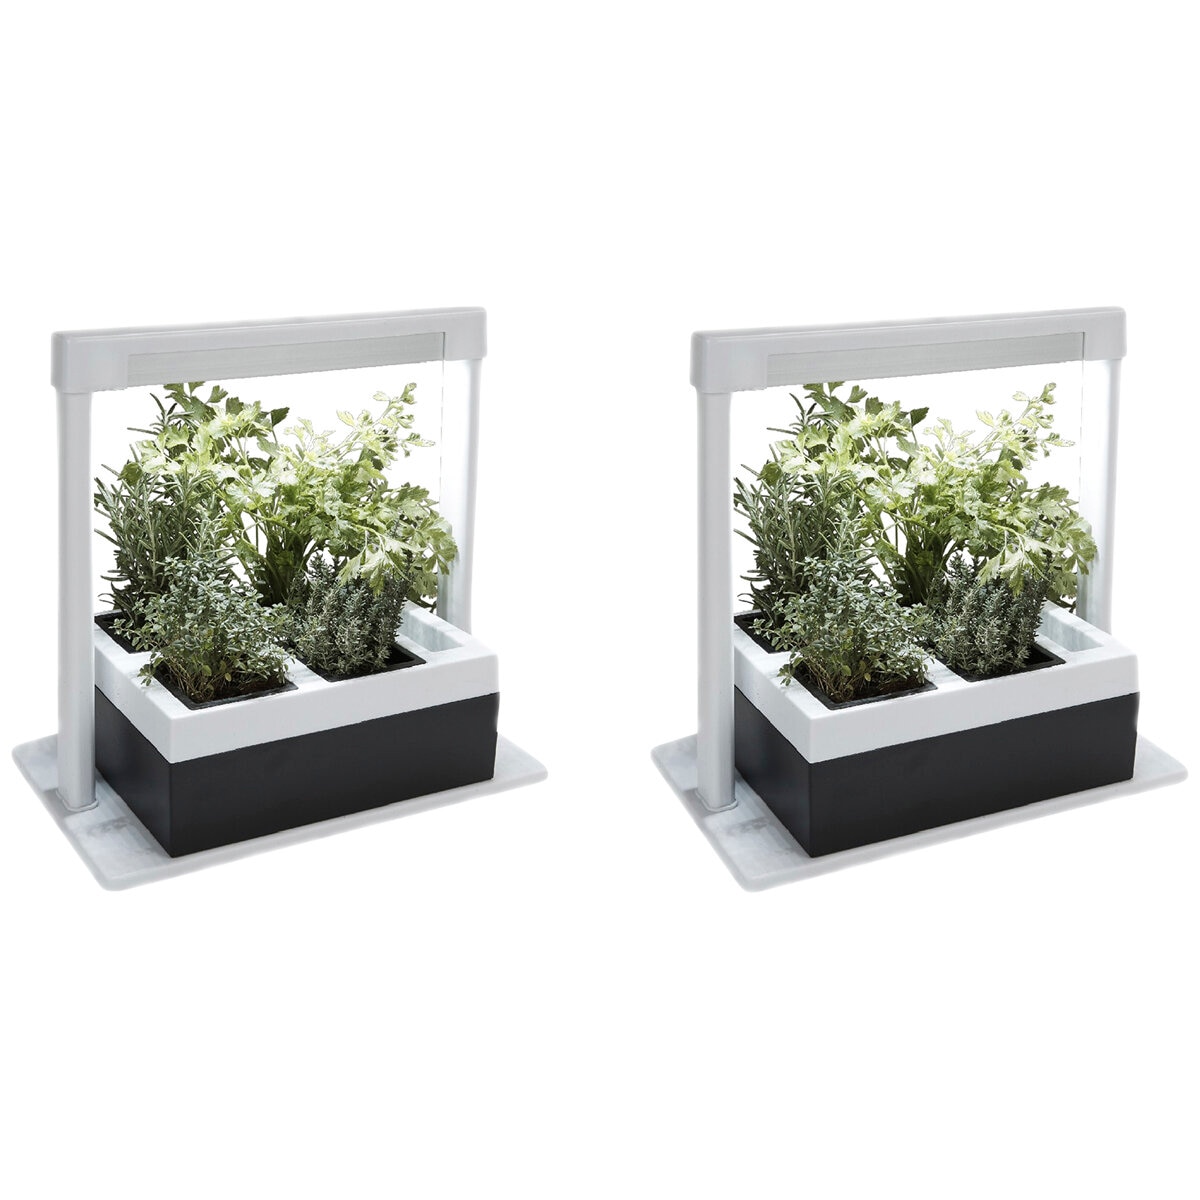 Greenlife 2 x Herb Lamp LED 4 Pot Grower 37 x 22 x 36 cm